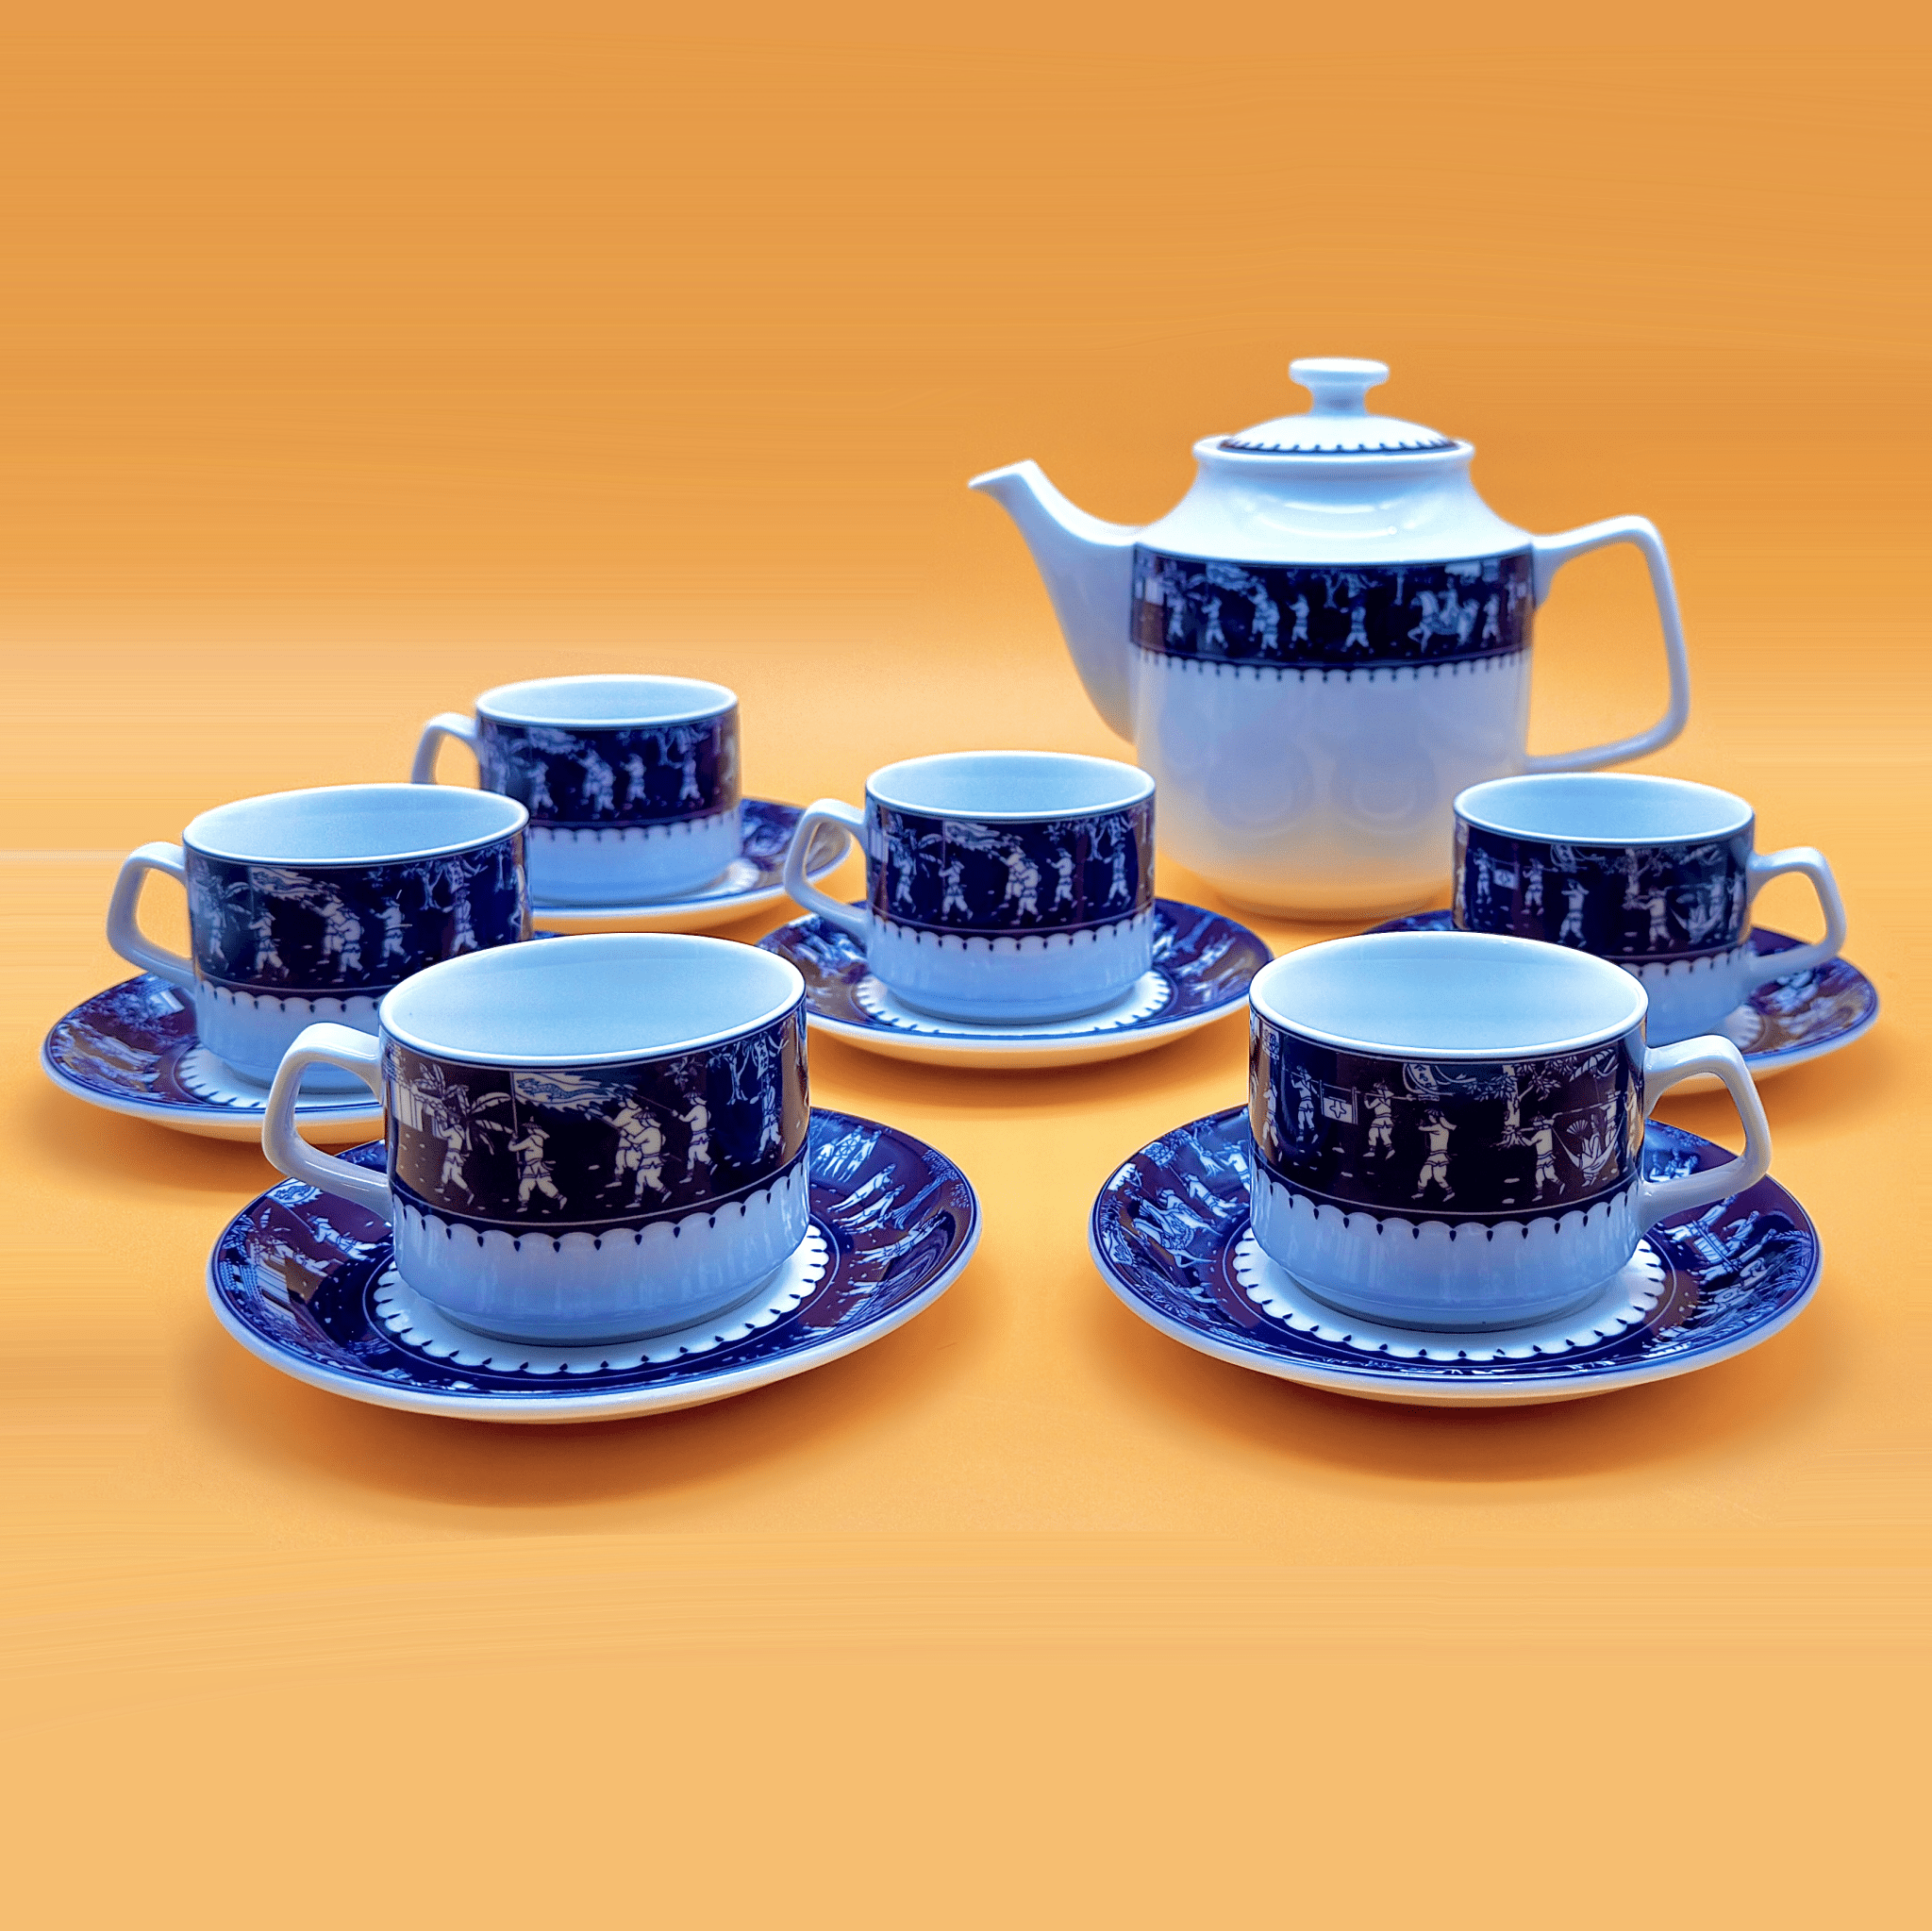 Weißes Porzelan Tee-Set (13 Teile) mit traditioneller Bemalung - VIET-TEE.de